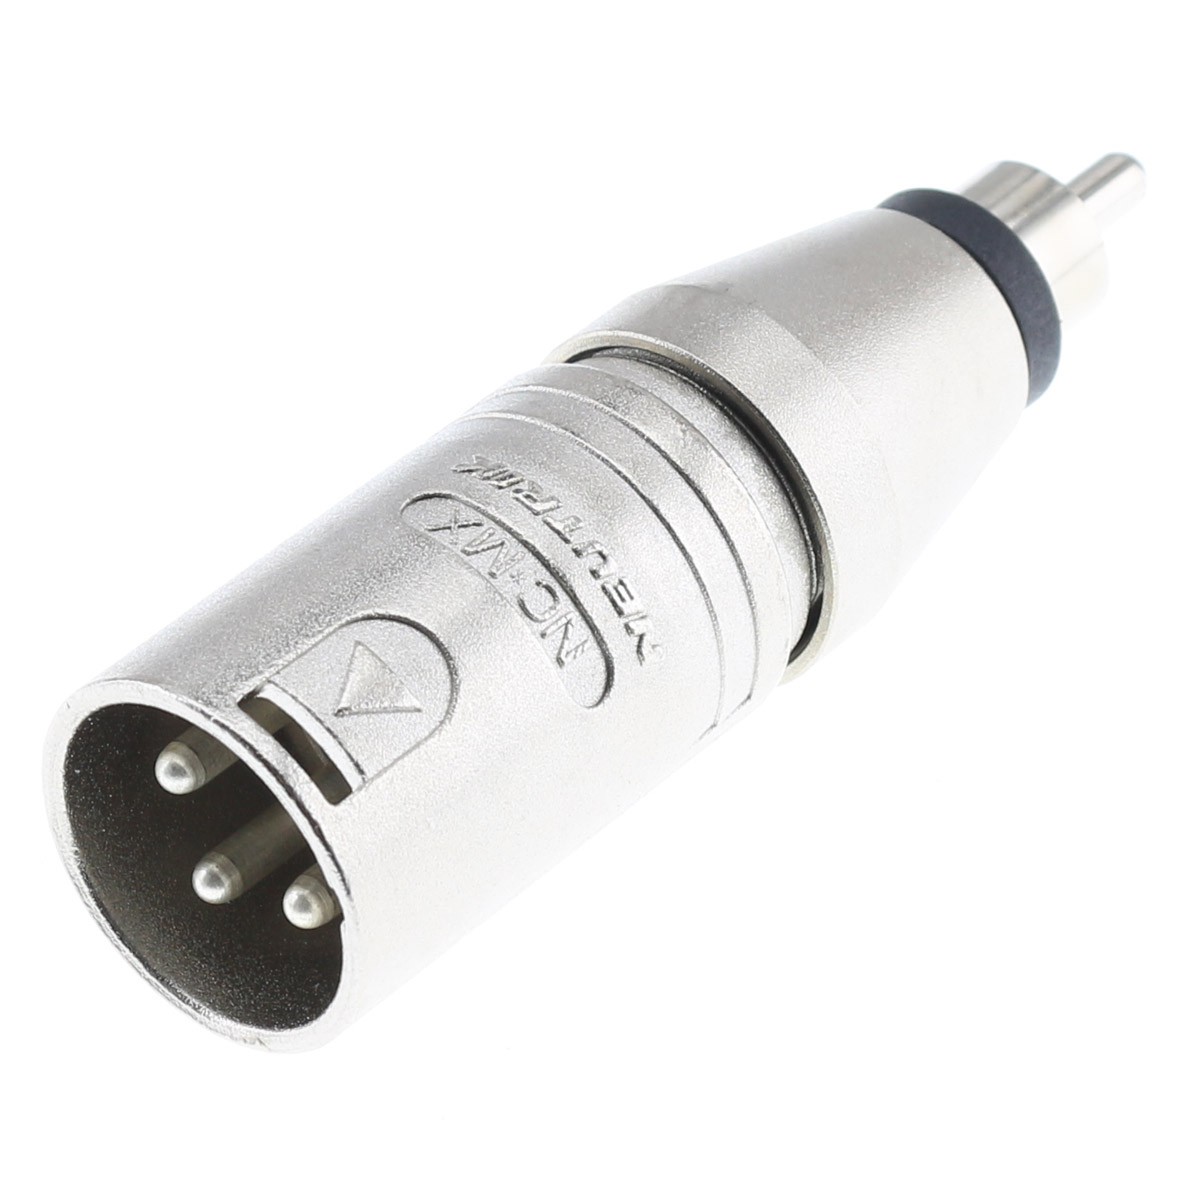 Neutrik 3-Pole XLR Male to RCA Male Adapter